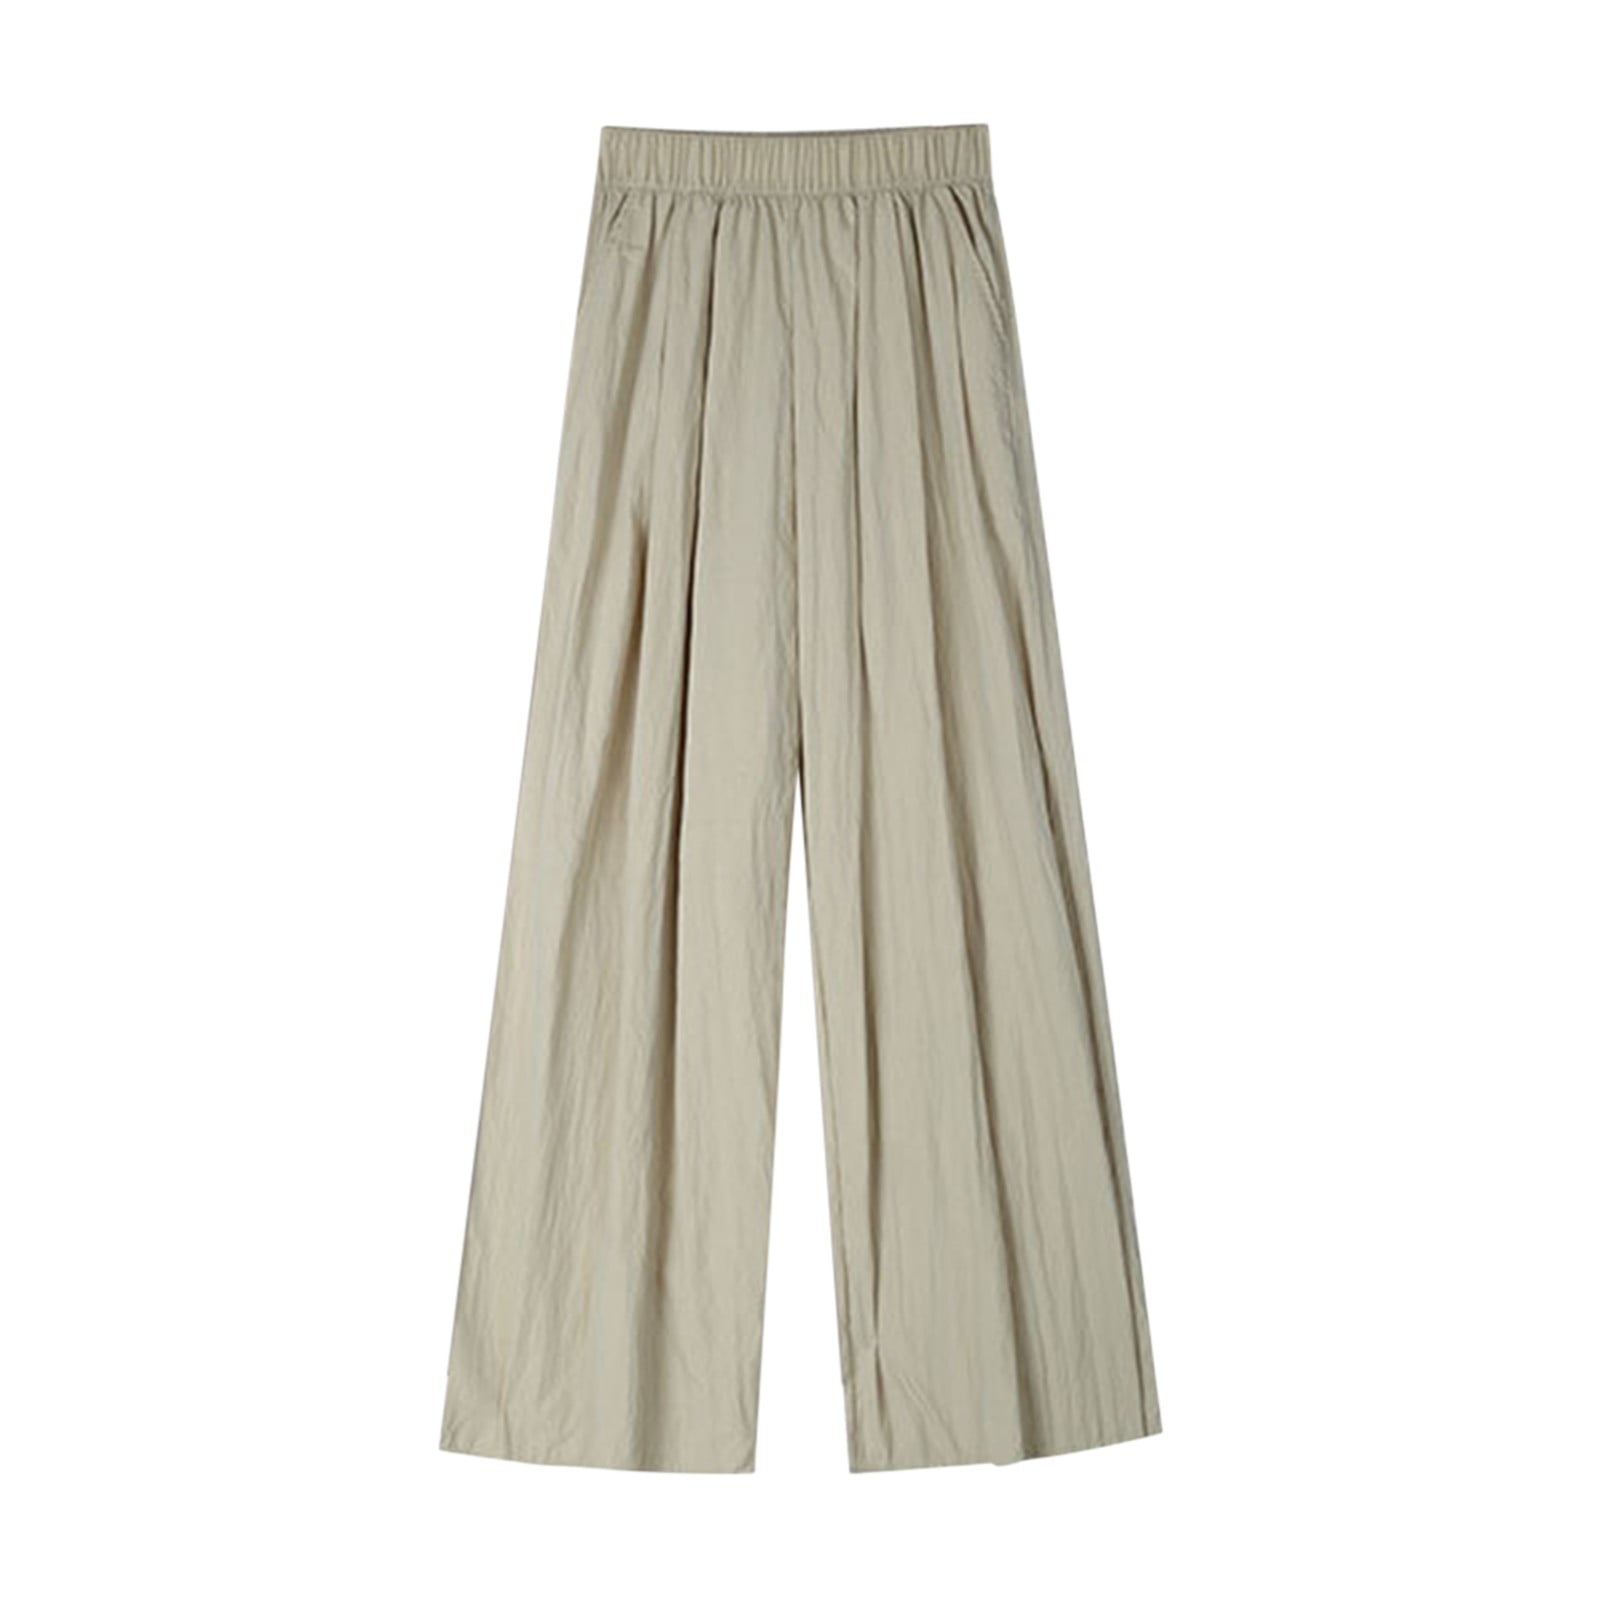 RUTAT Womens Pants Pants for Women Textured High Waist Solid Pants